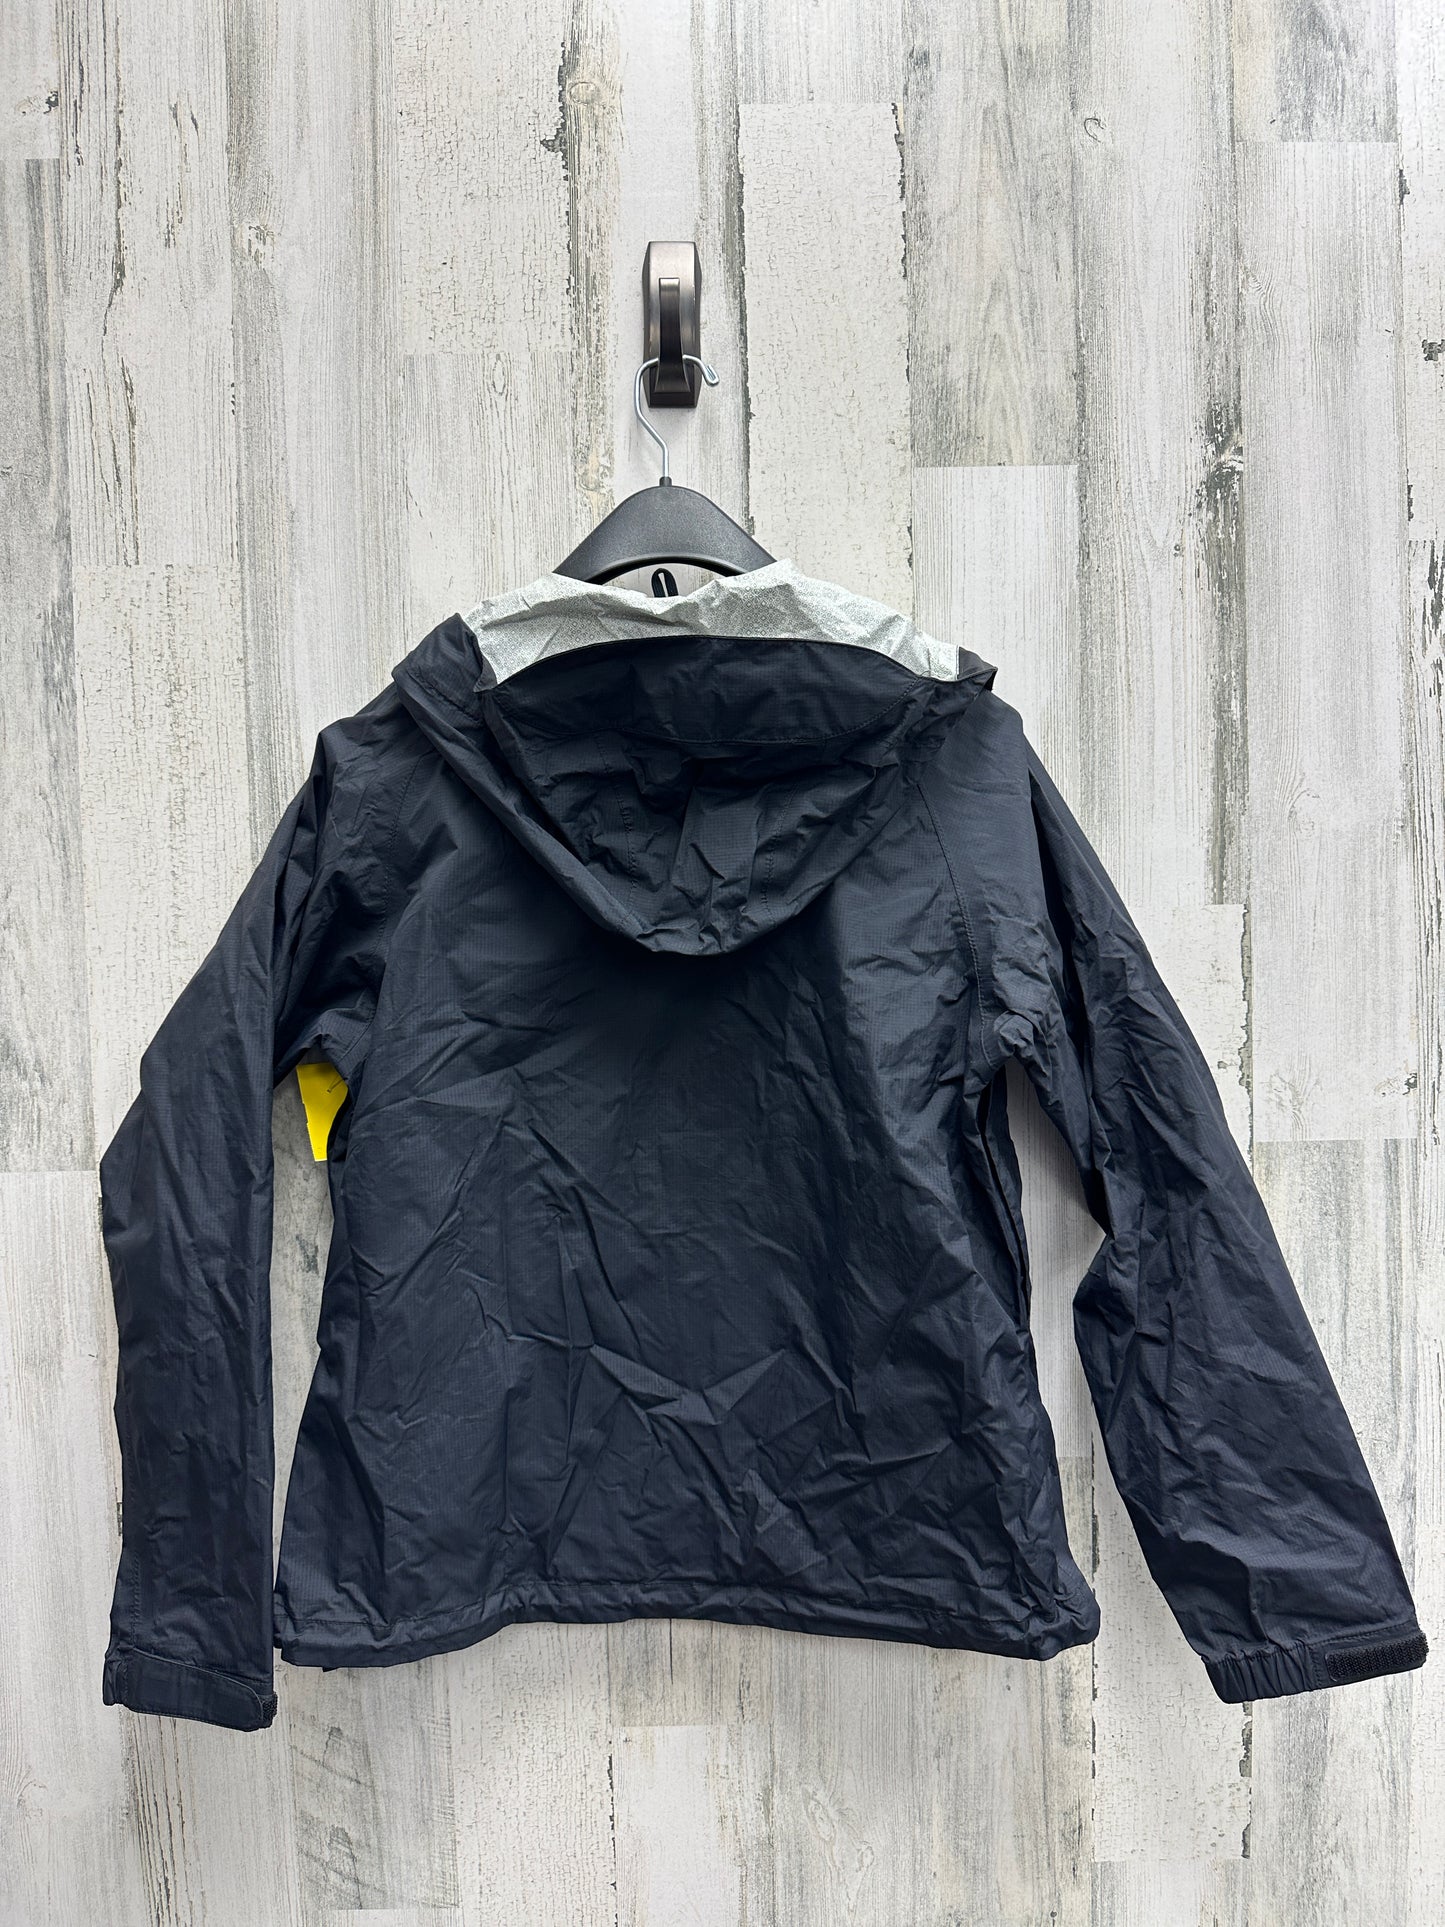 Jacket Windbreaker By North Face  Size: S